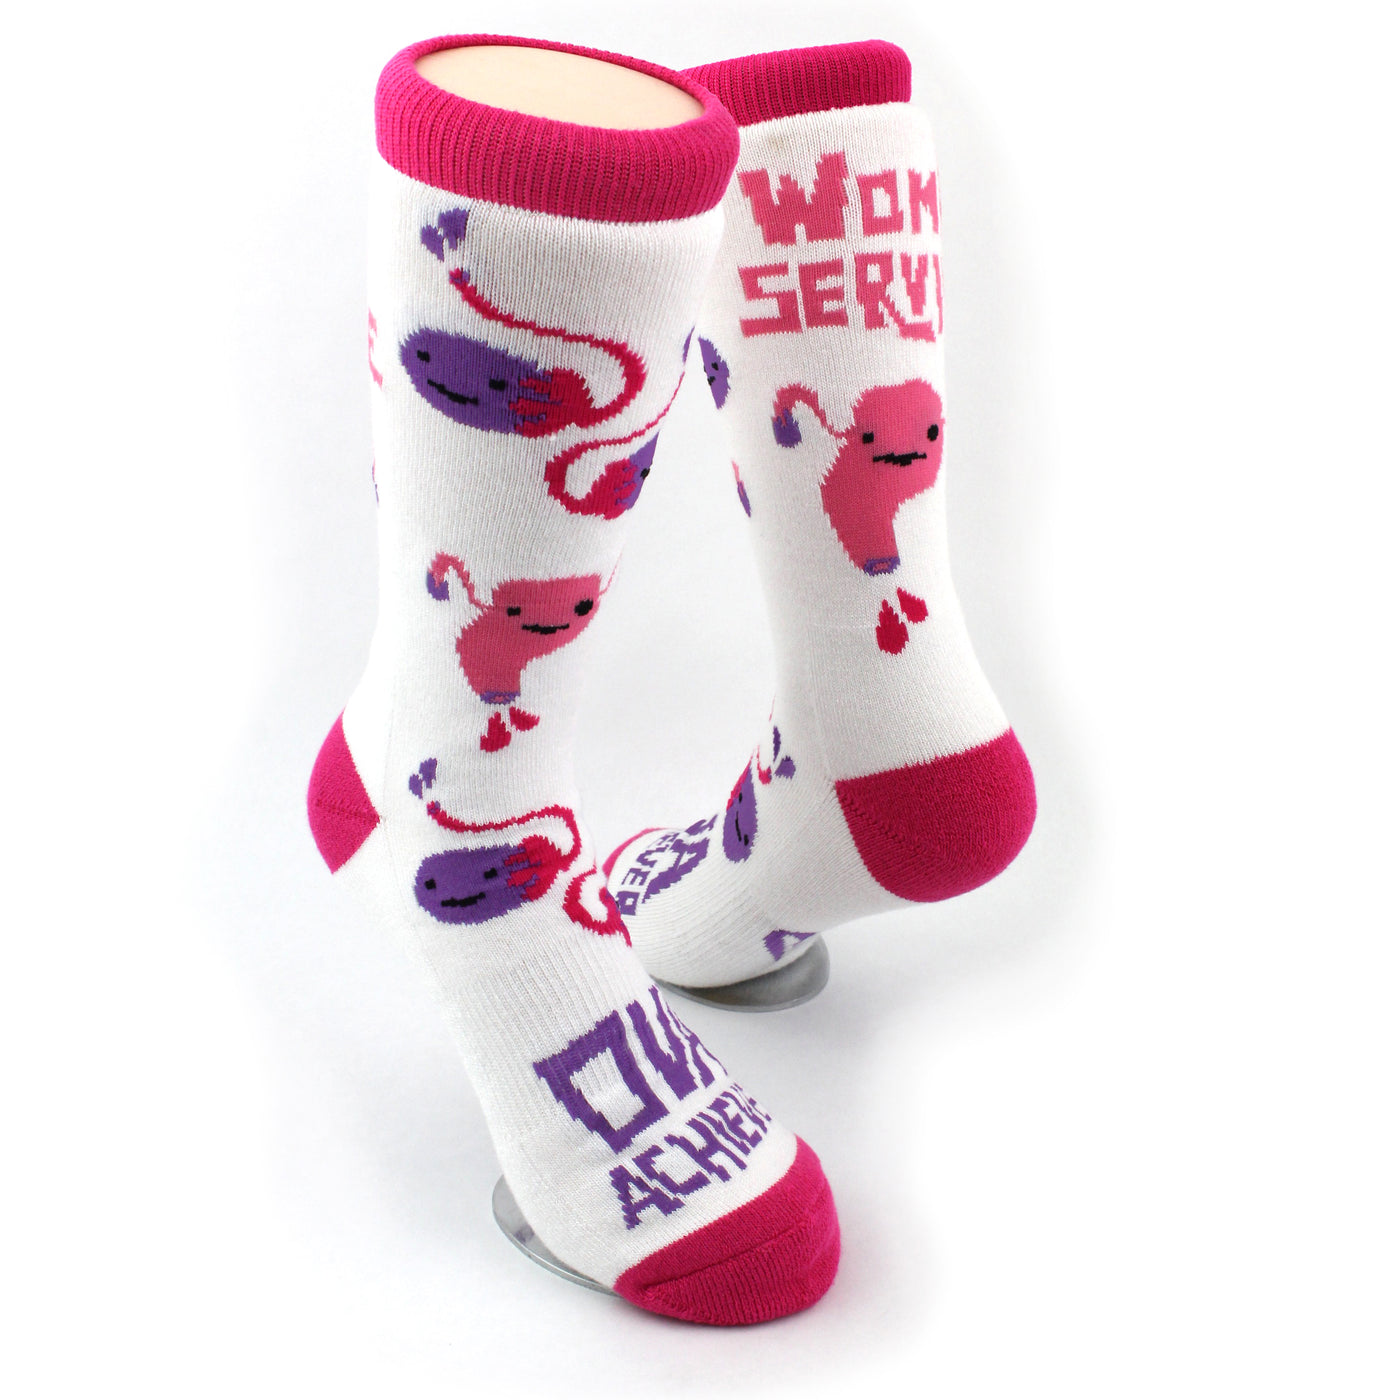 Uterus Socks - Ova Achiever Socks - OBGYN Socks - Cute Uterus Socks